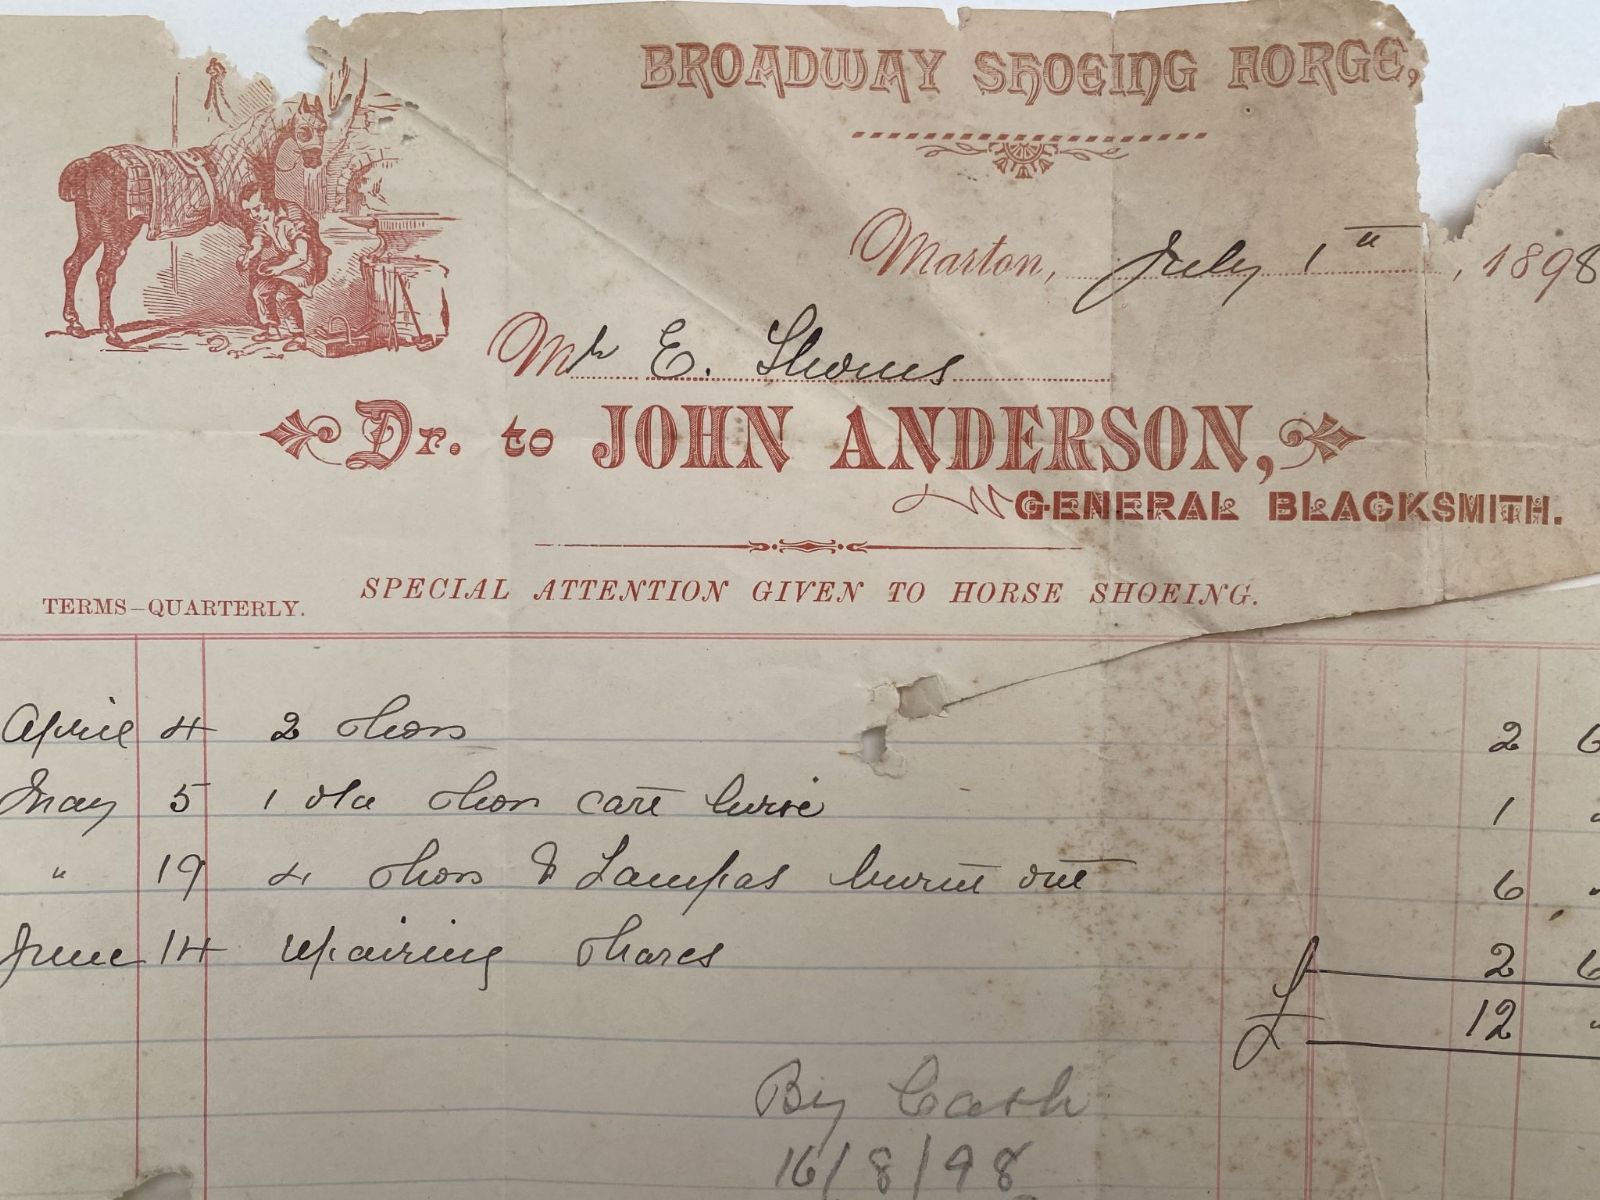 ANTIQUE INVOICE: John Anderson - General Blacksmith, Marton 1898 (124 yo)